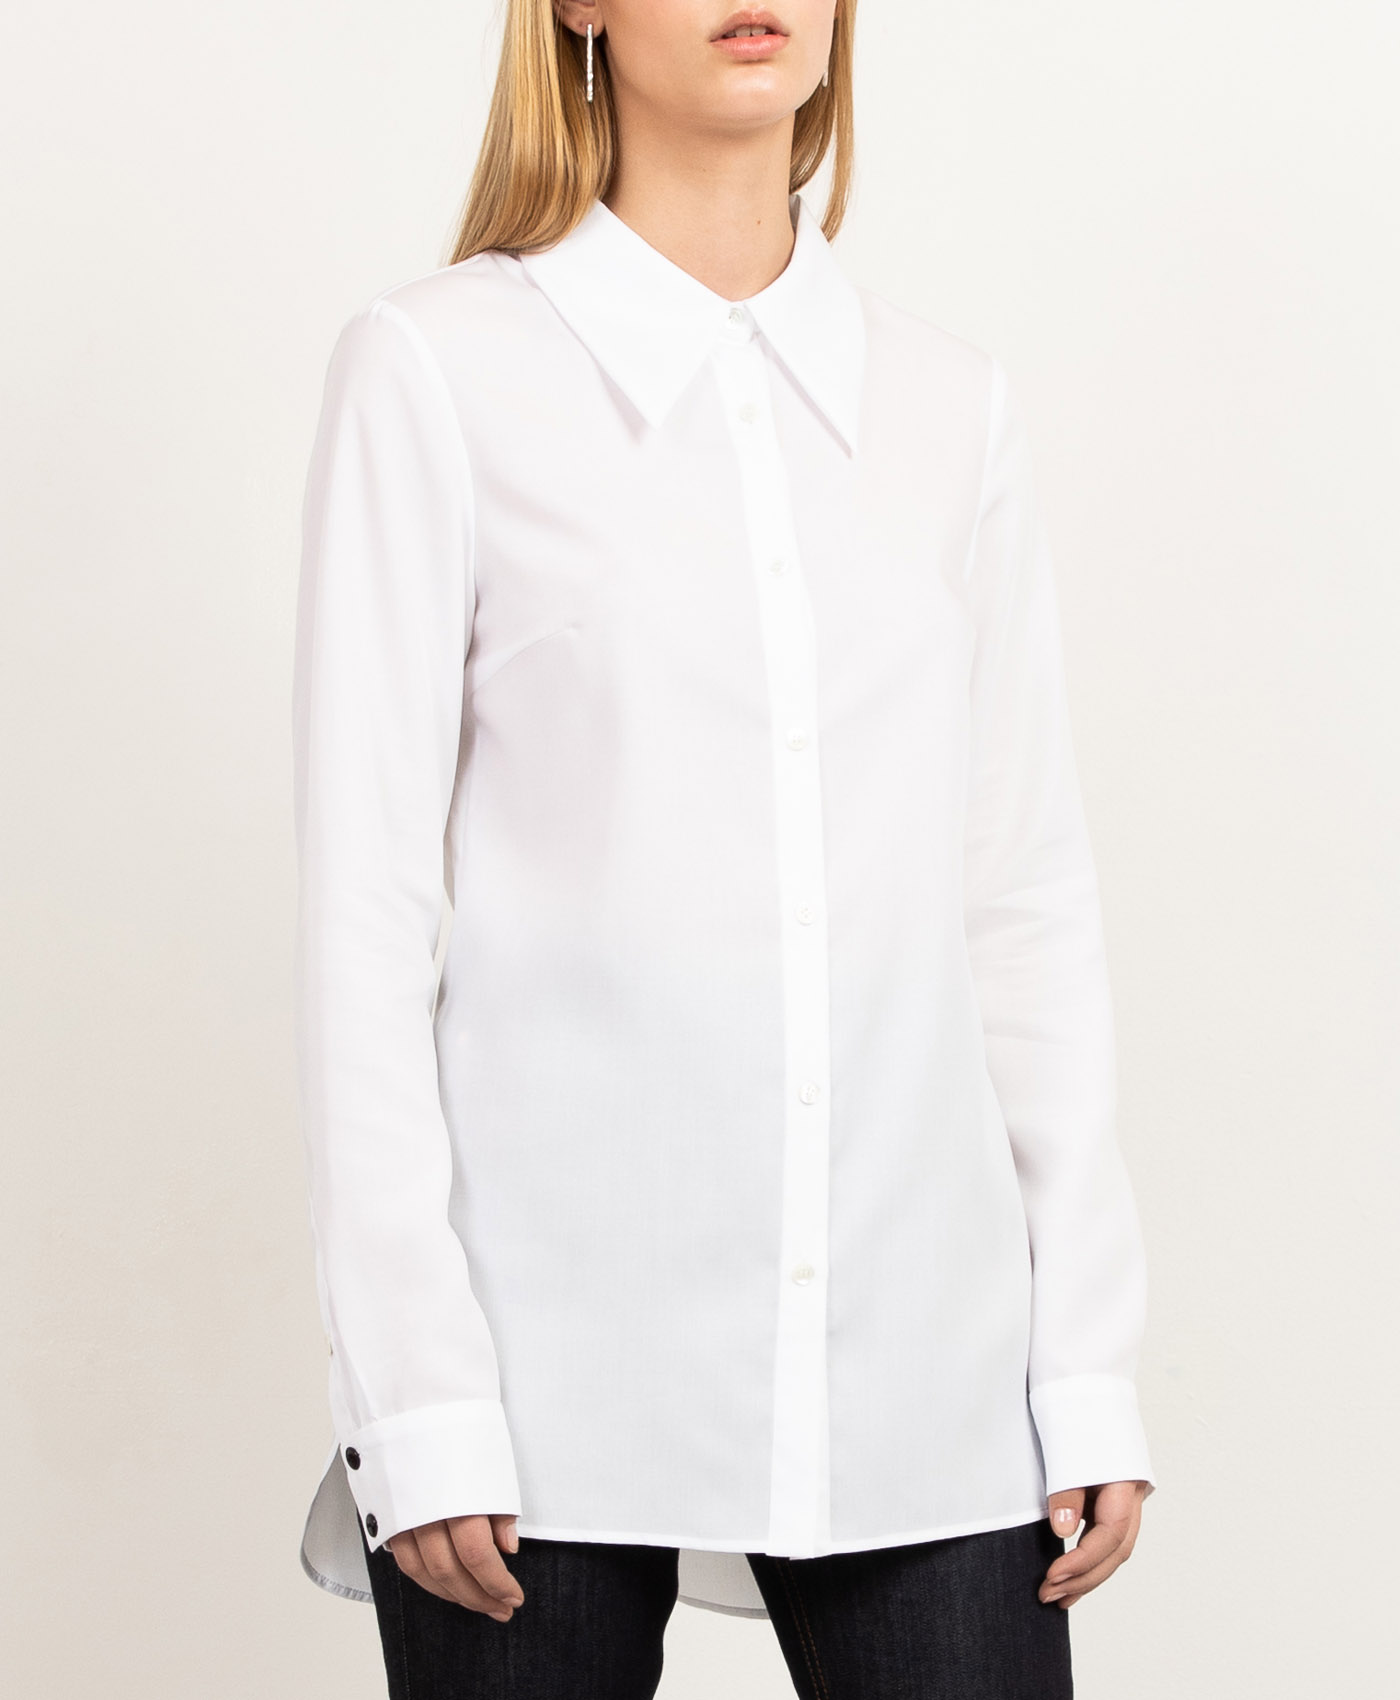 White essential shirt in lyocell by Studio Heijne